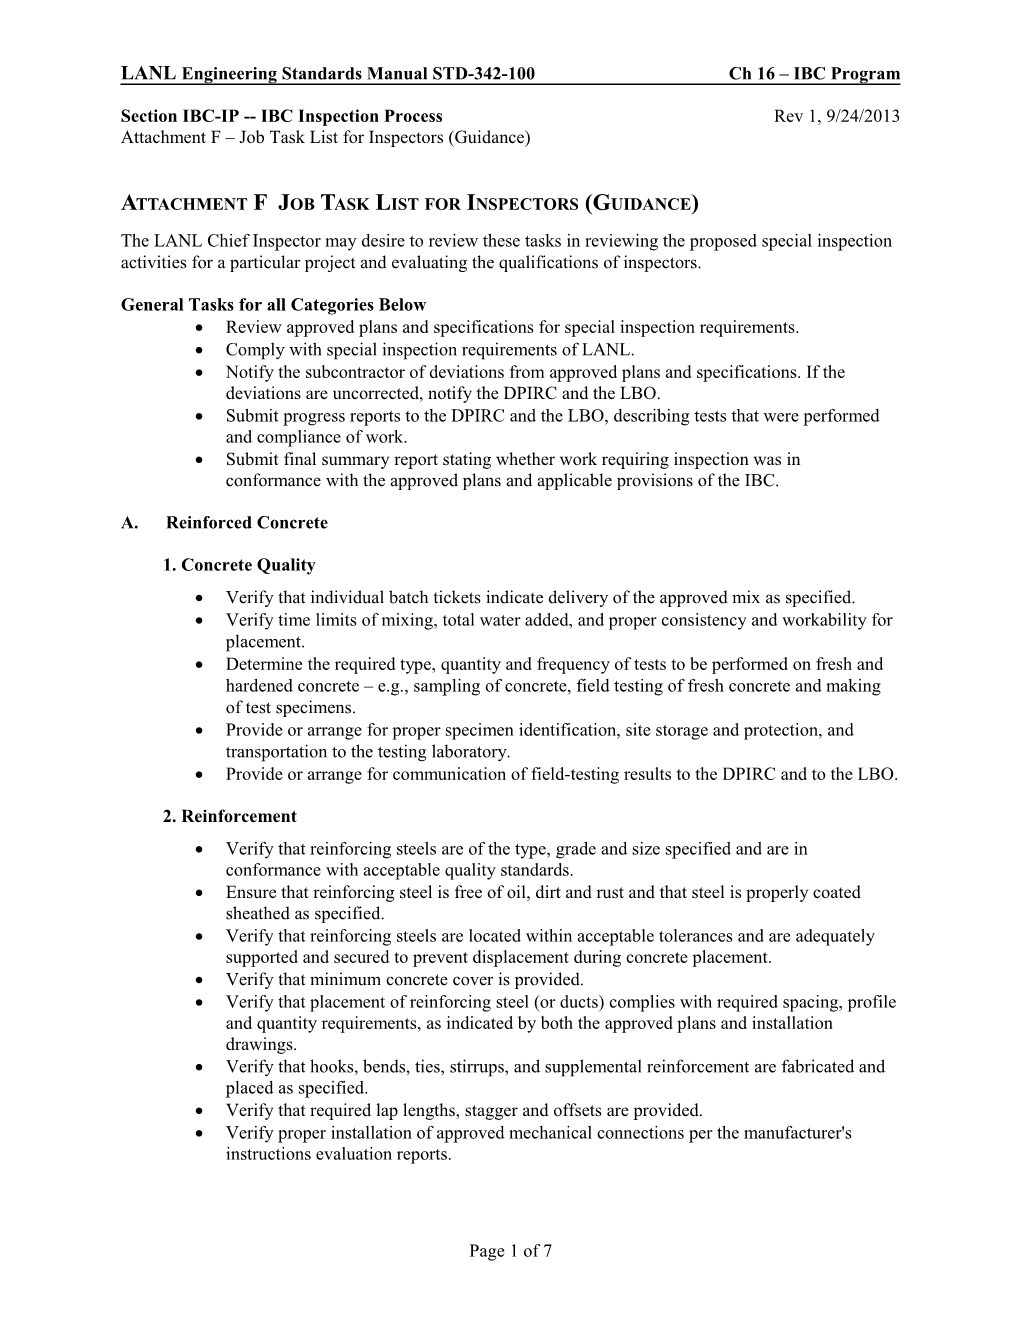 Appendix F Job Task List for Inspectors (Guidance)